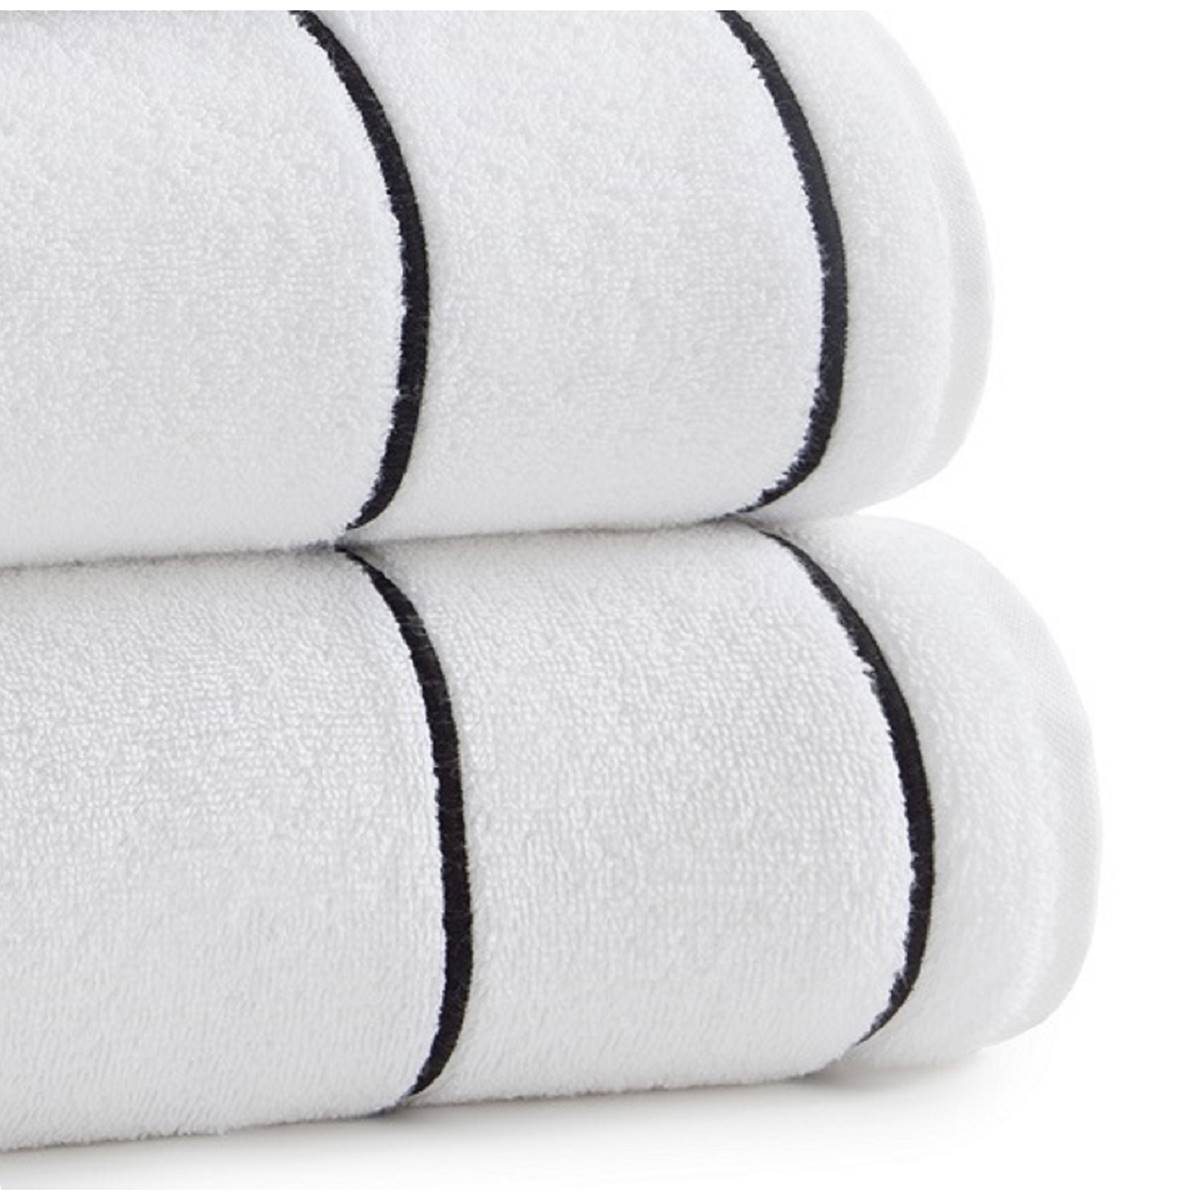 Cassadecor Bowery Bath Towel Collection